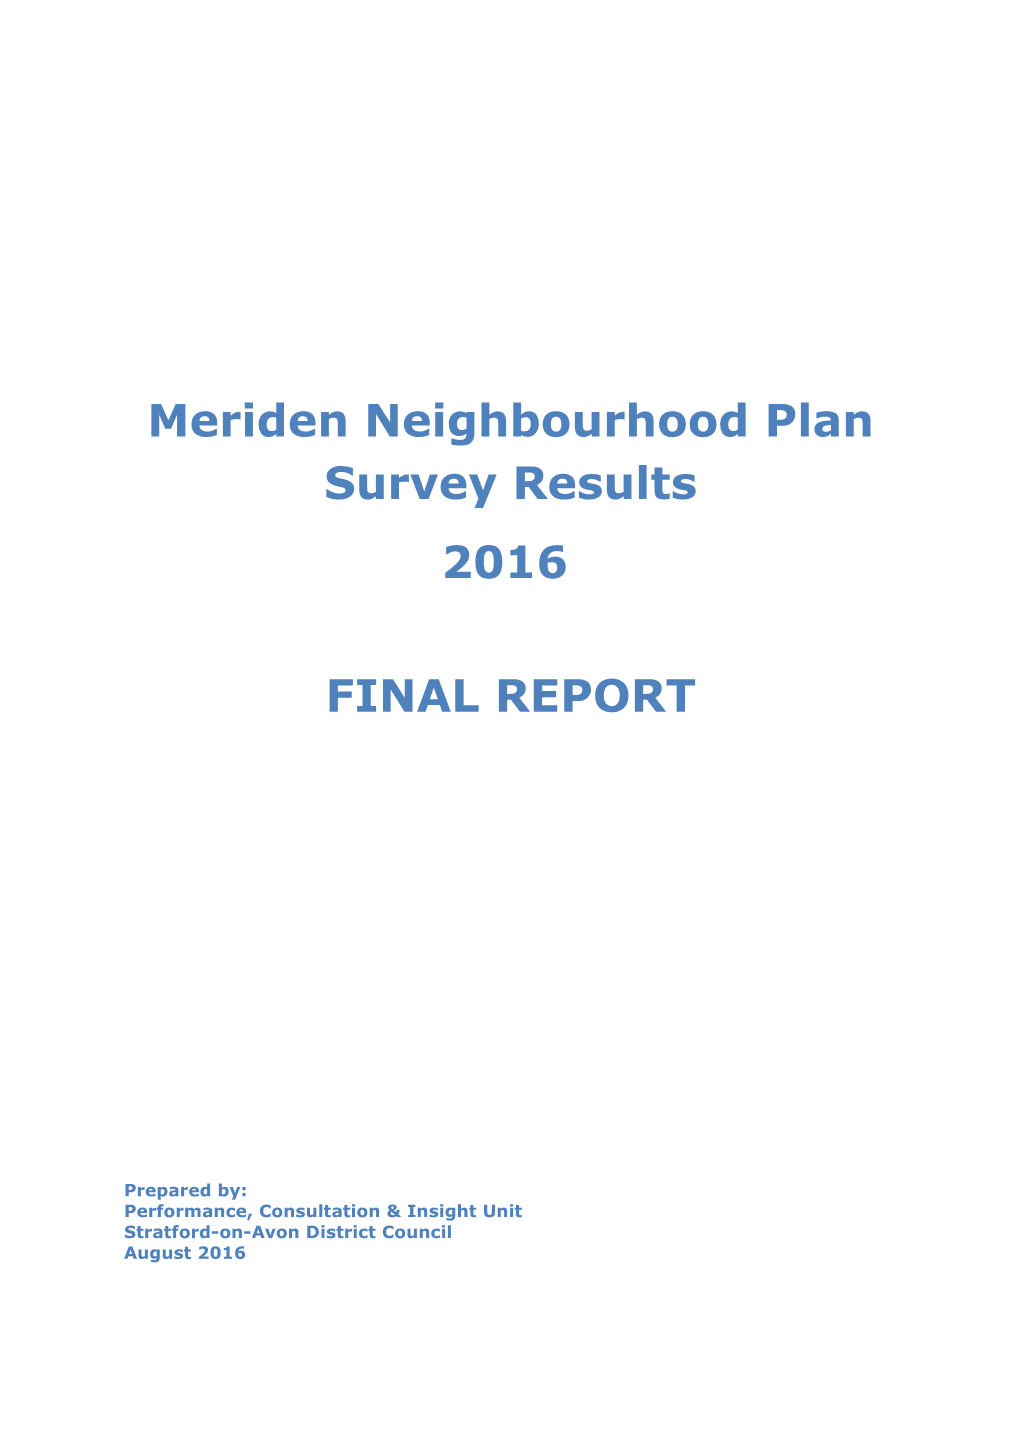 Meriden Neighbourhood Plan Survey Results 2016